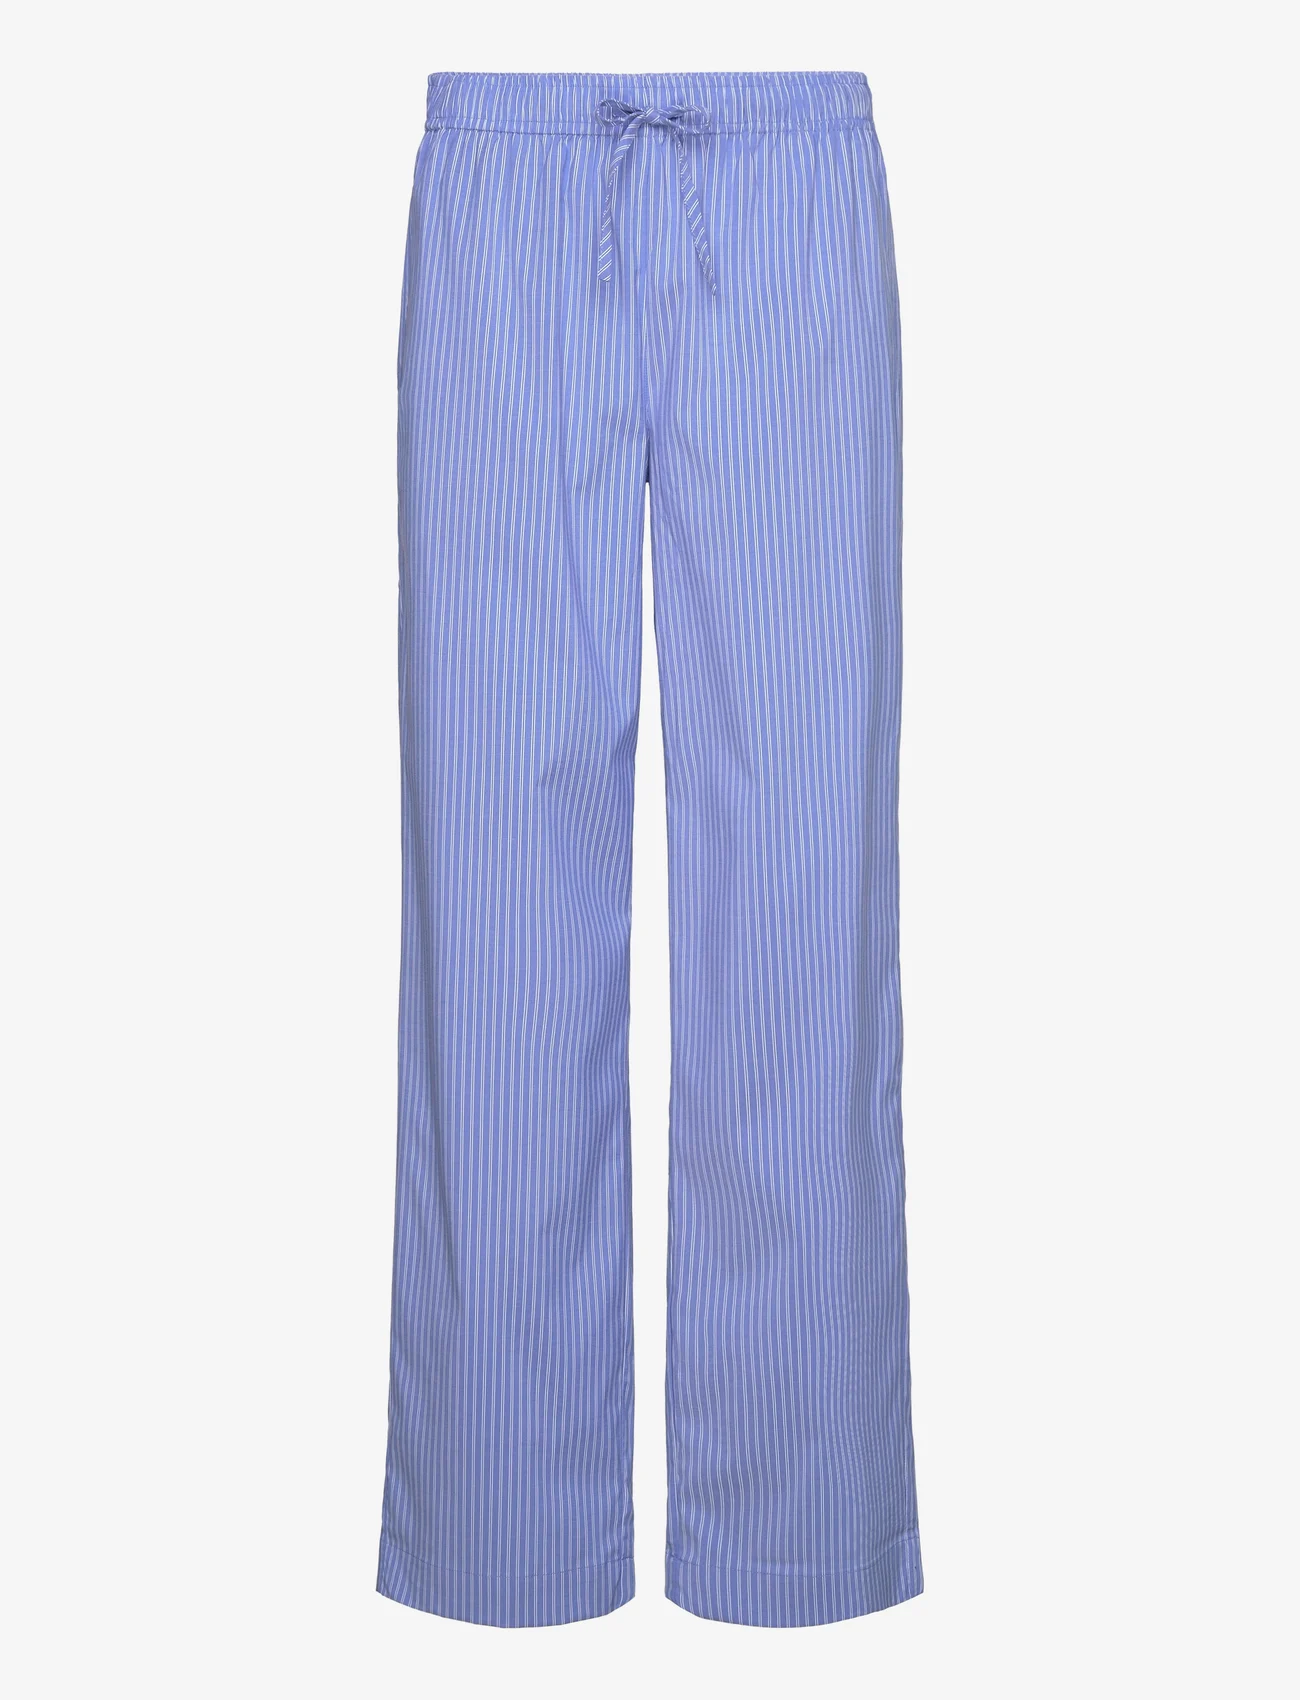 Sofie Schnoor - Trousers - plačios kelnės - blue striped - 0